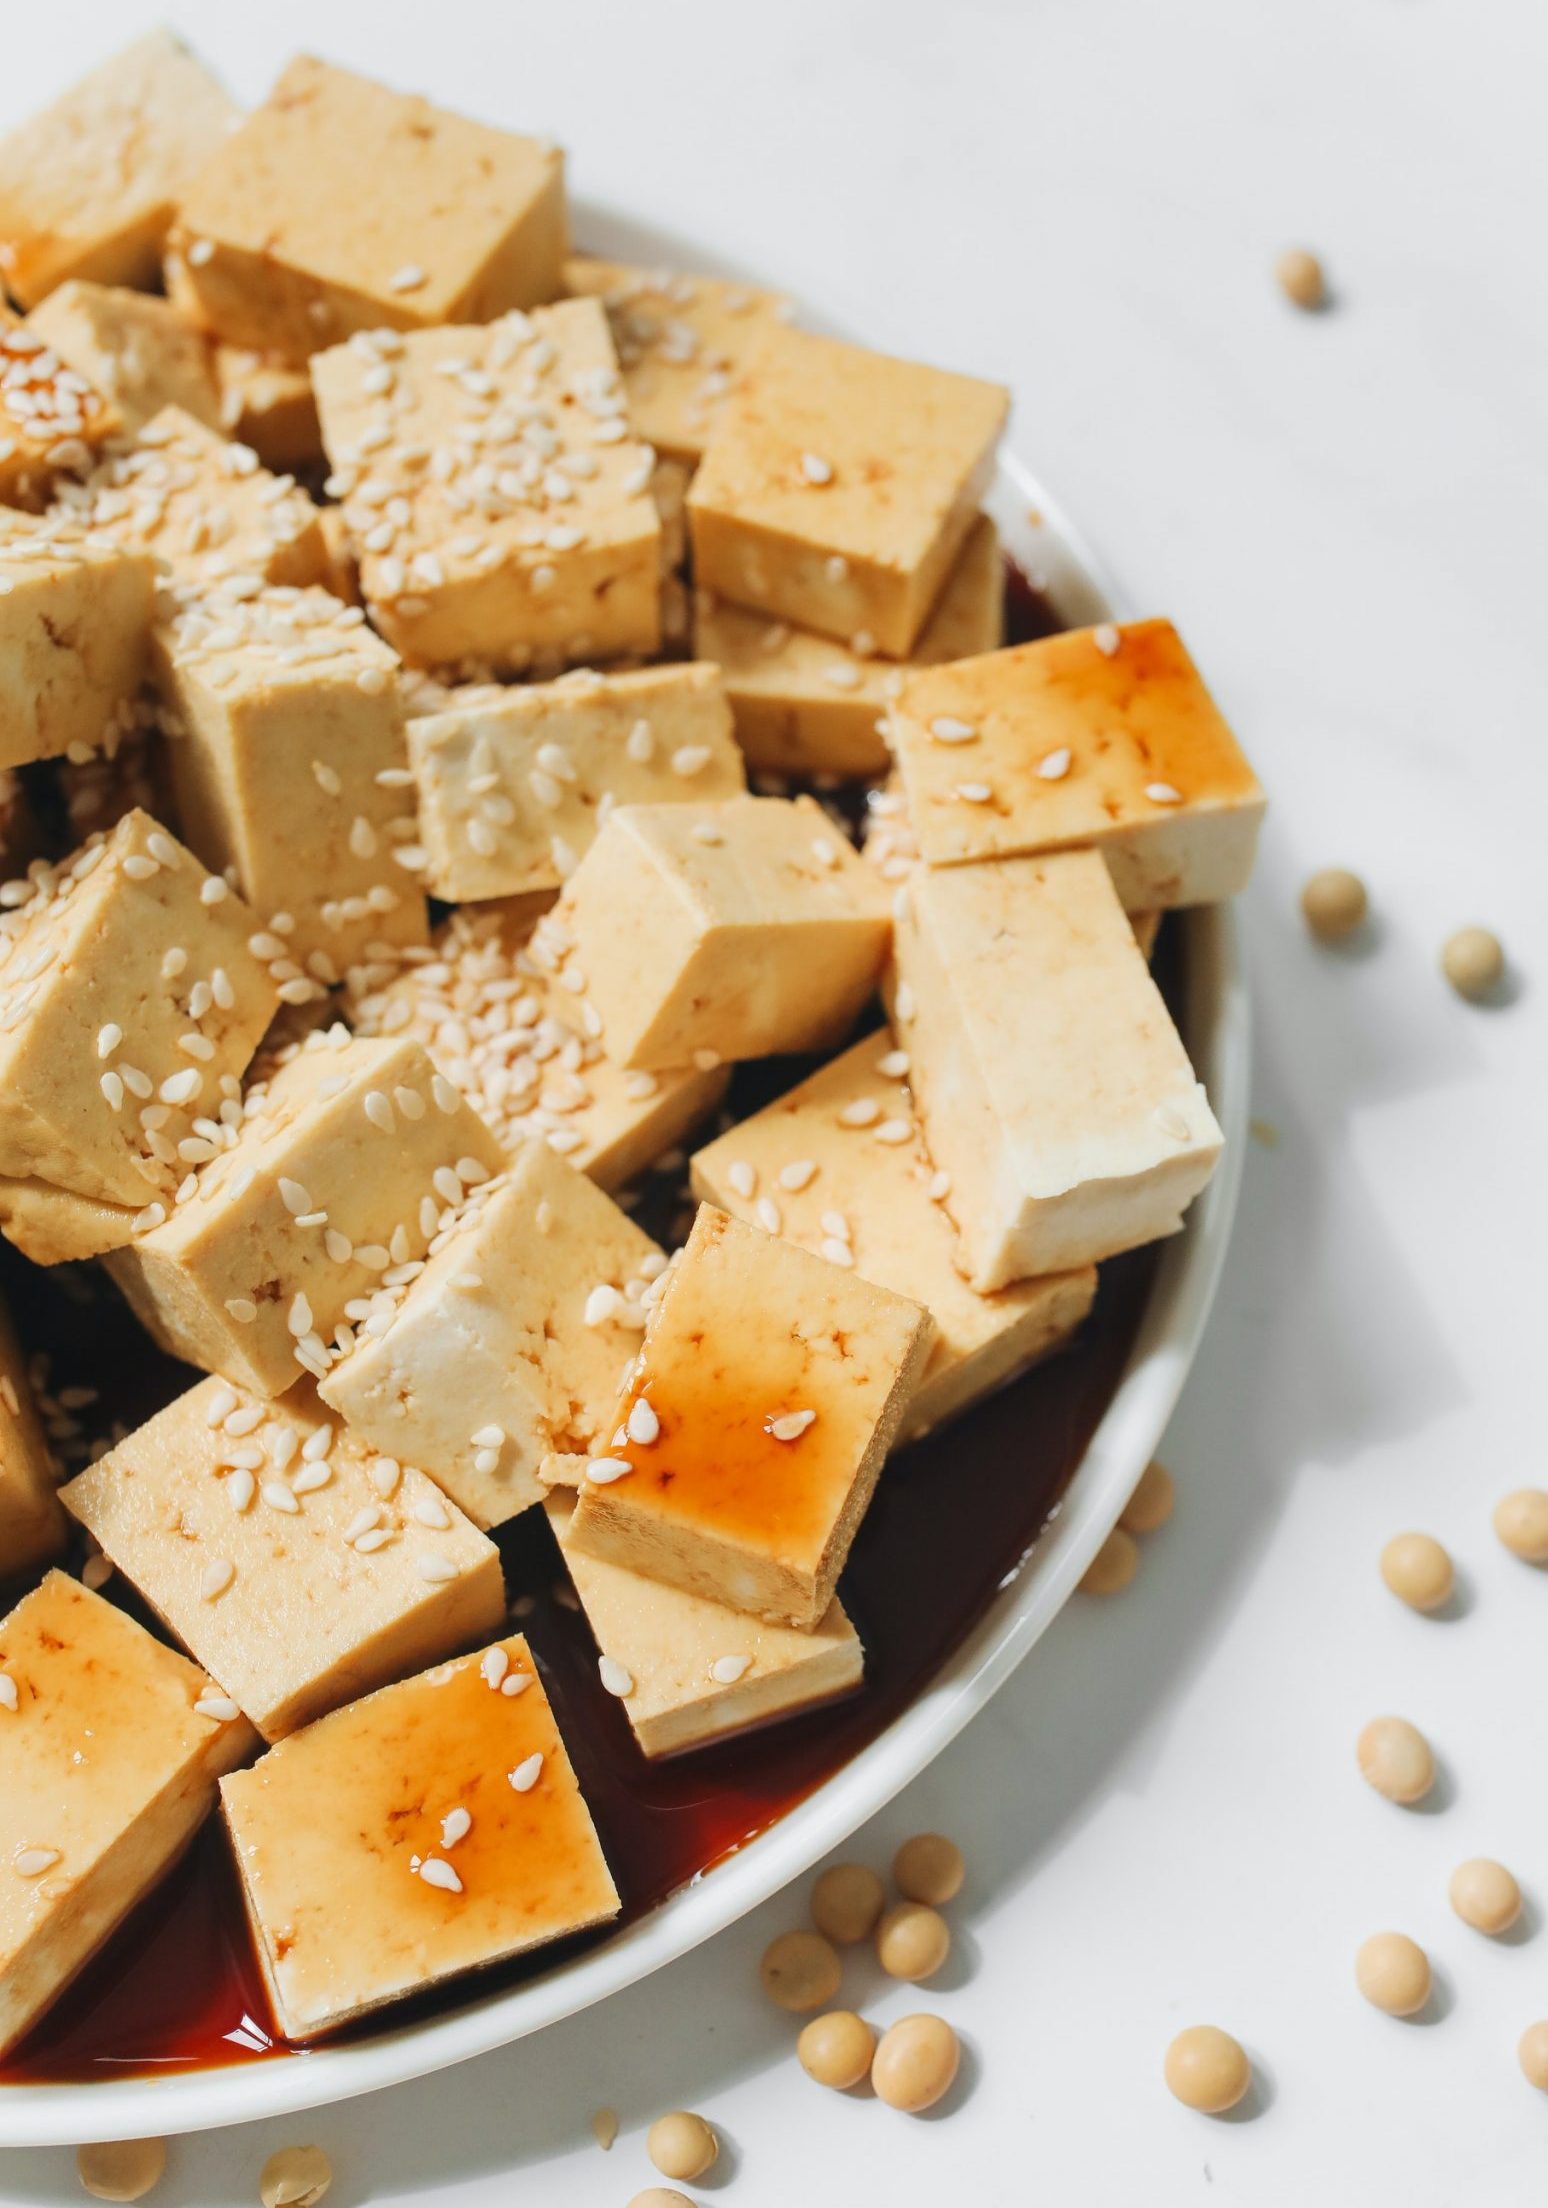 Grasas saludables (tofu)